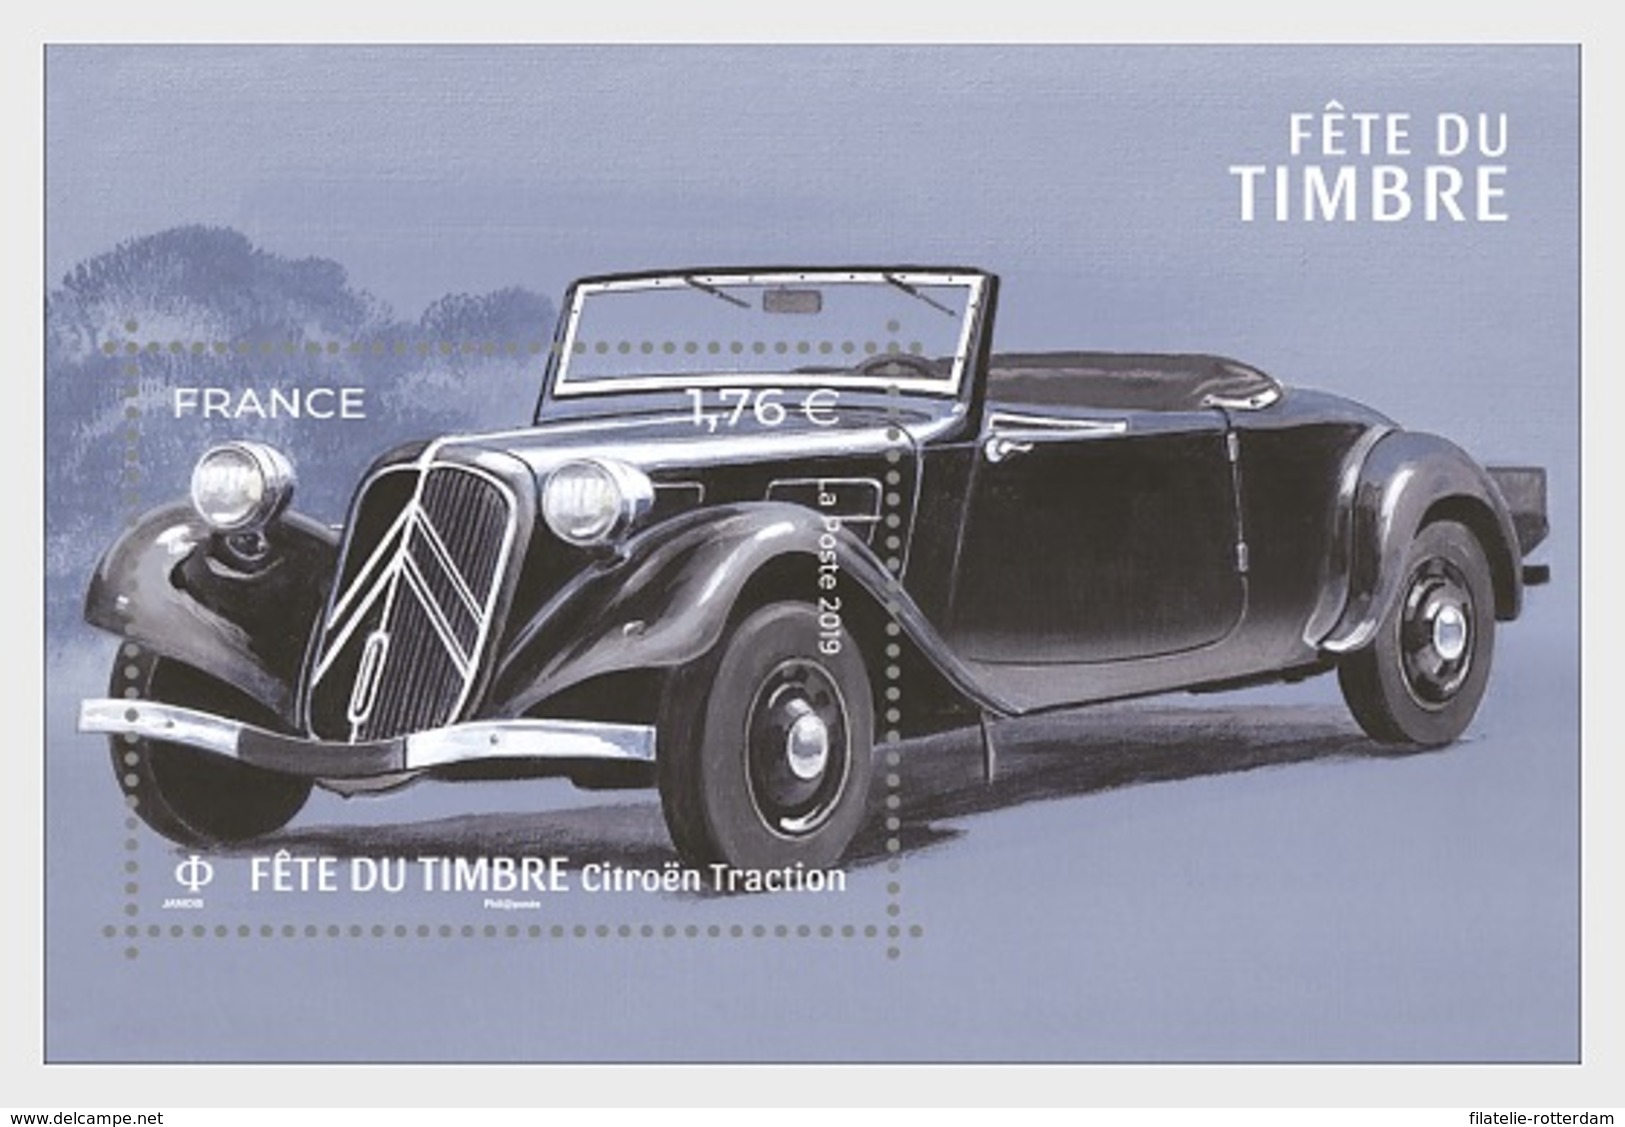 Frankrijk / France - Postfris / MNH - Sheet Dag Van De Postzegel 2019 - Ongebruikt